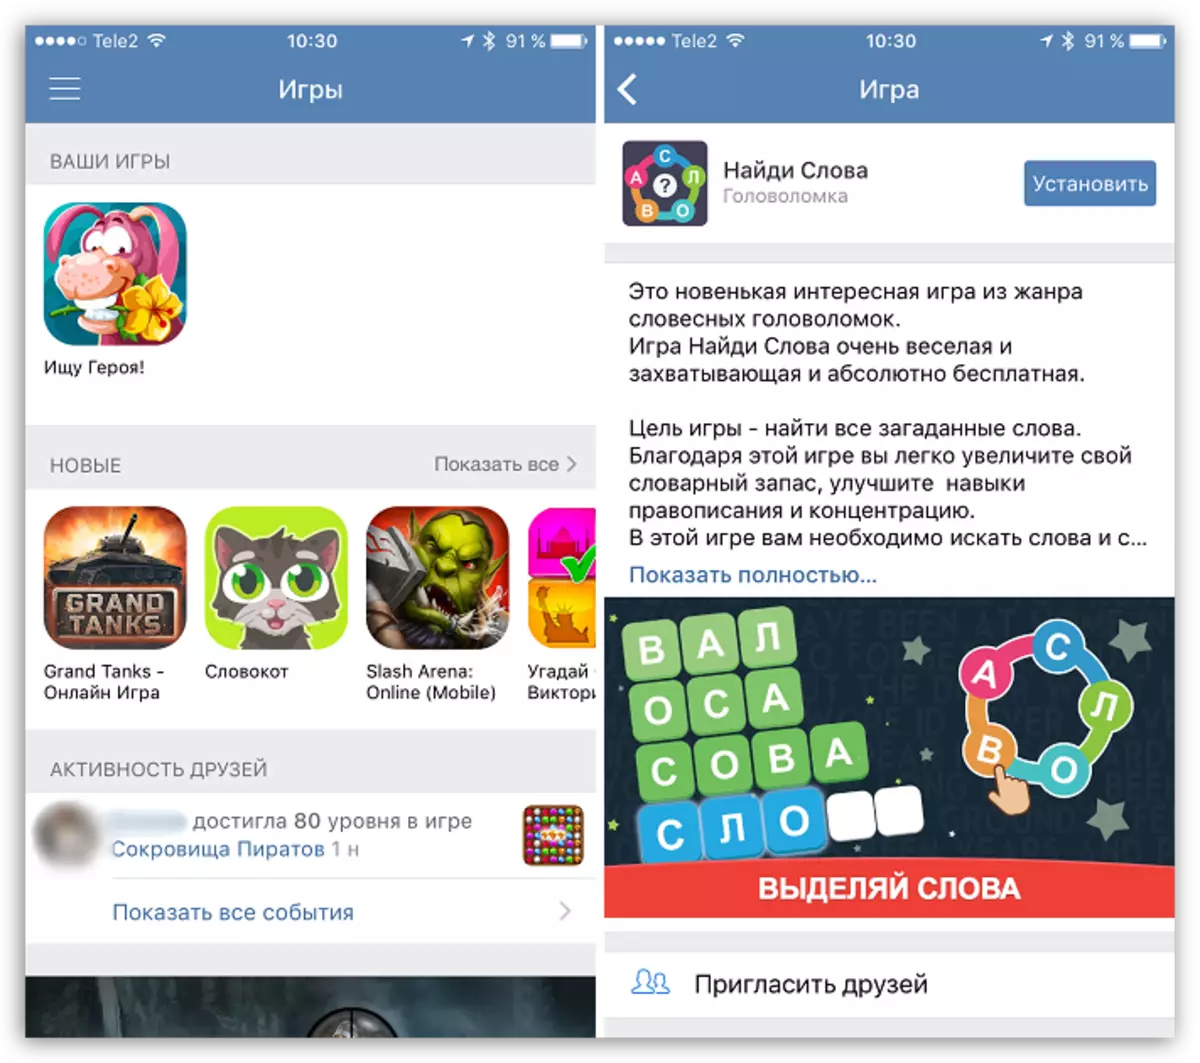 IOS కోసం VKontakte లో ఆట